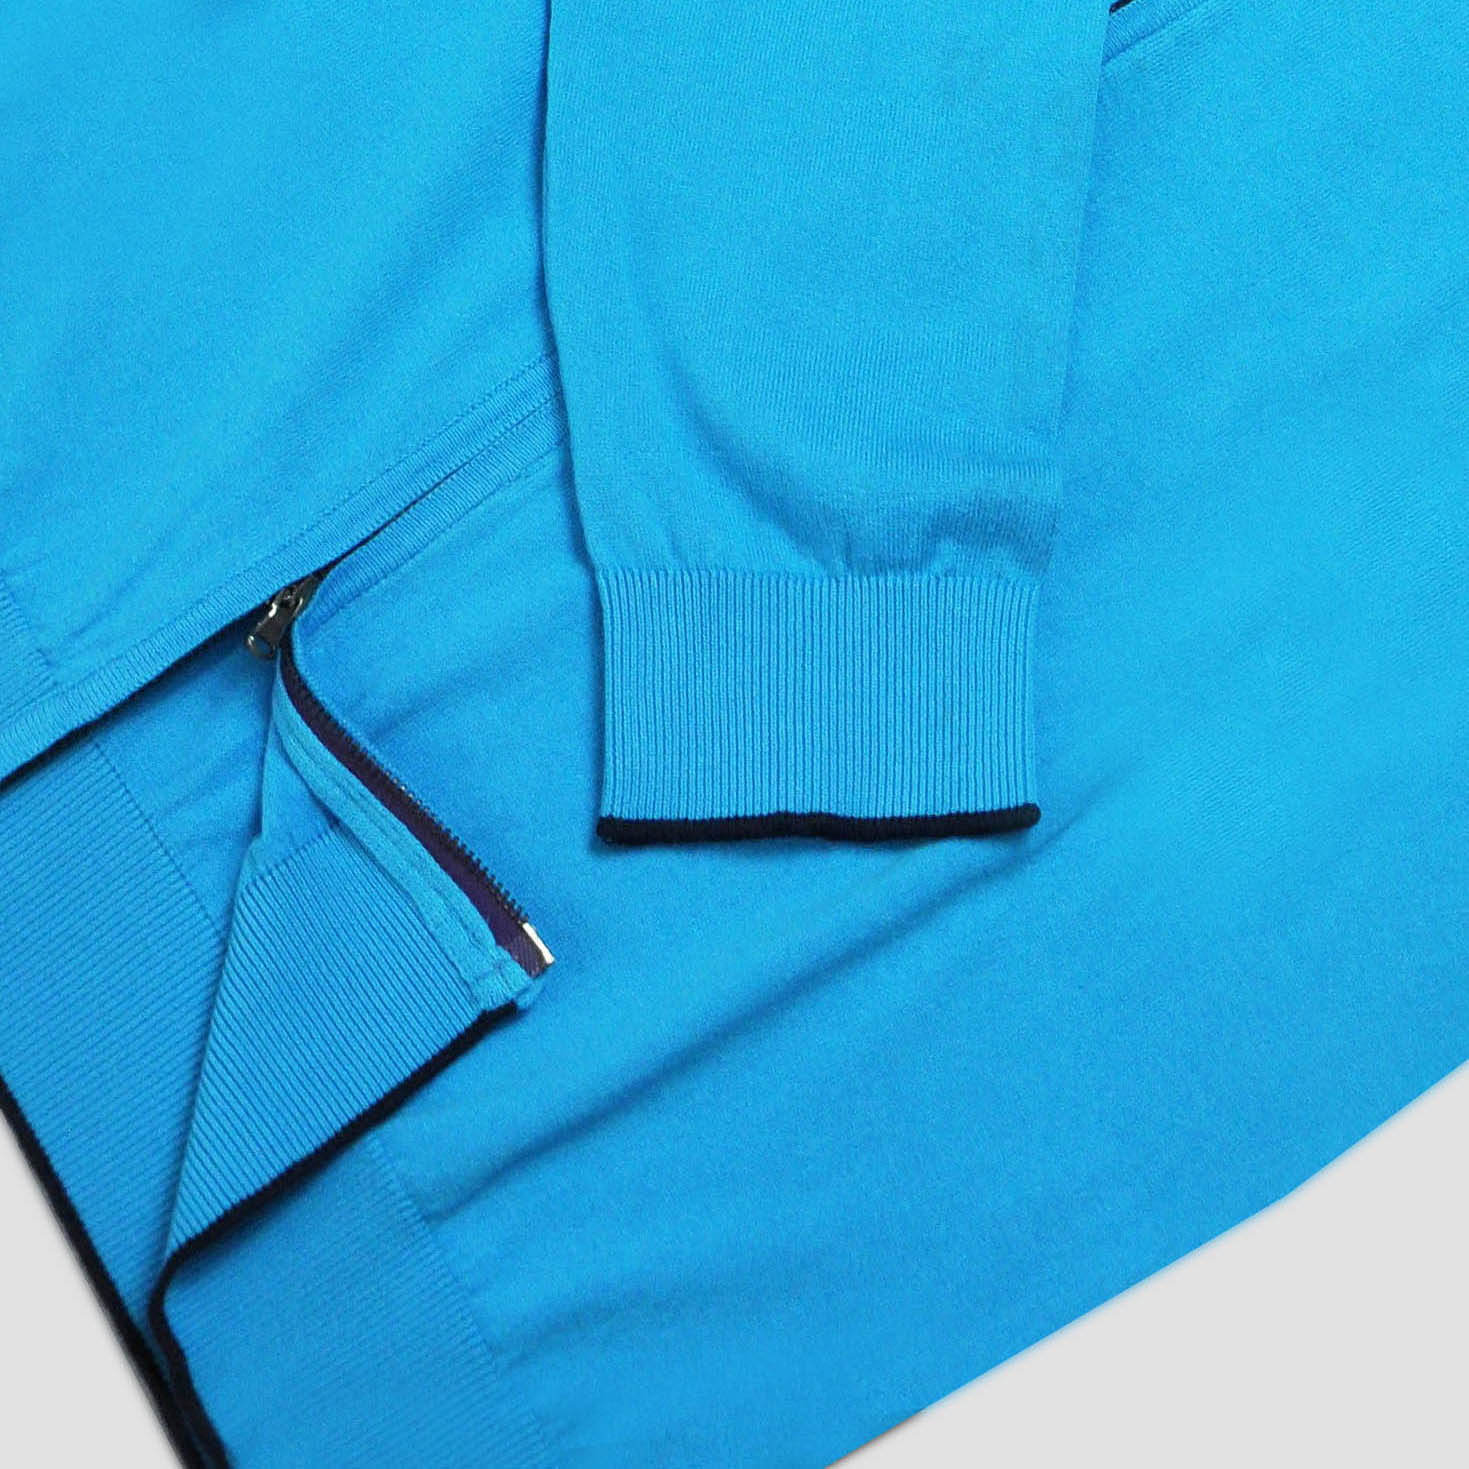 Fine Cotton Quarter Zip Collar in Arctic Blue with Navy Trim